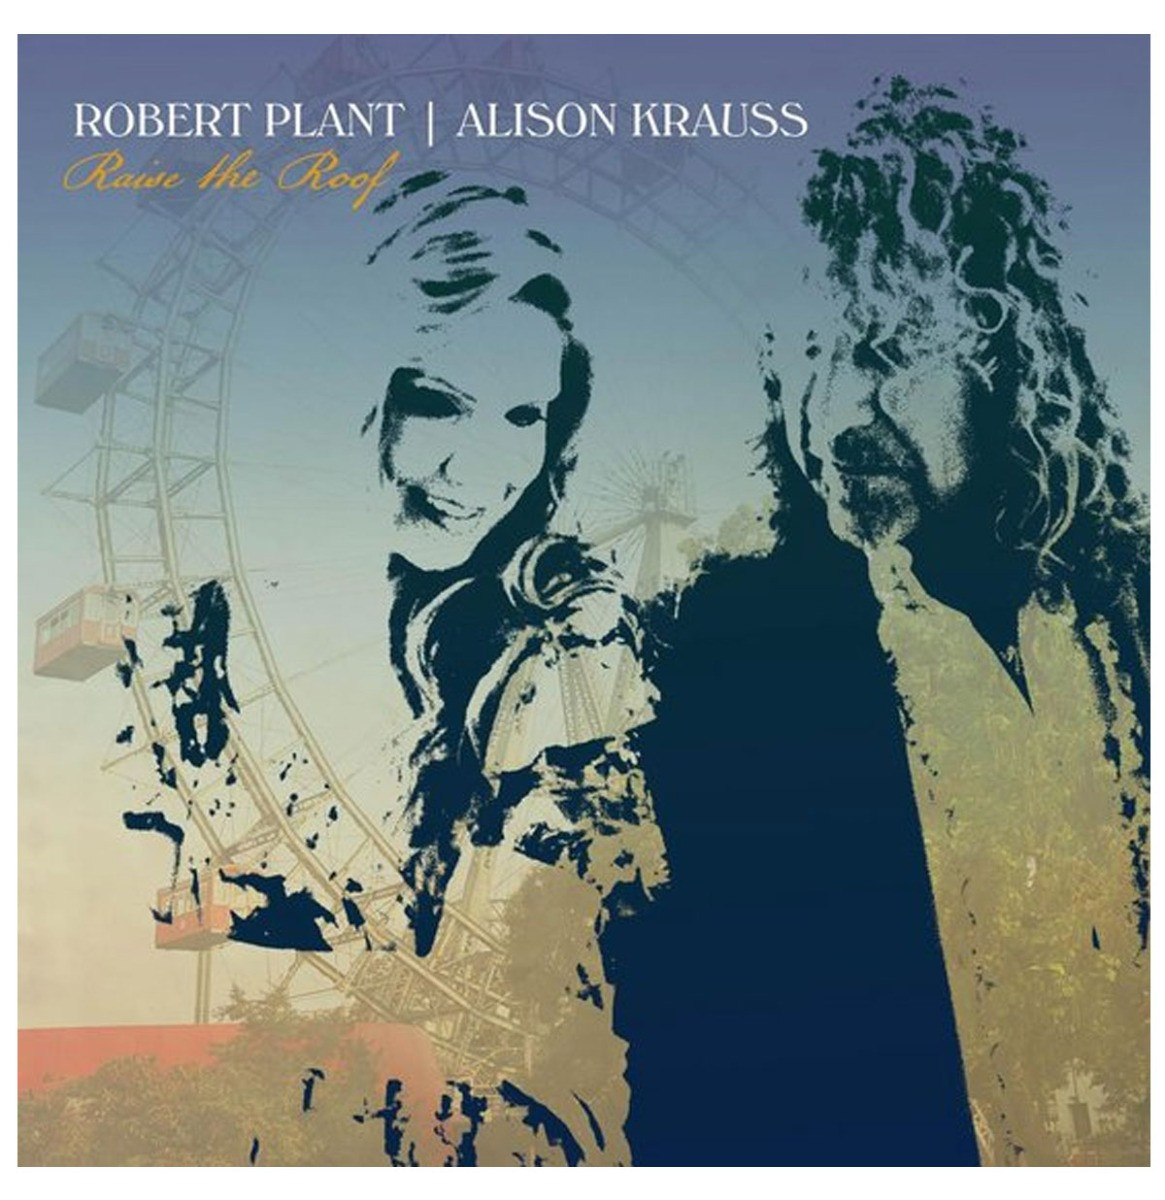 Robert Plant & Alison Krauss - Raise The Roof LP